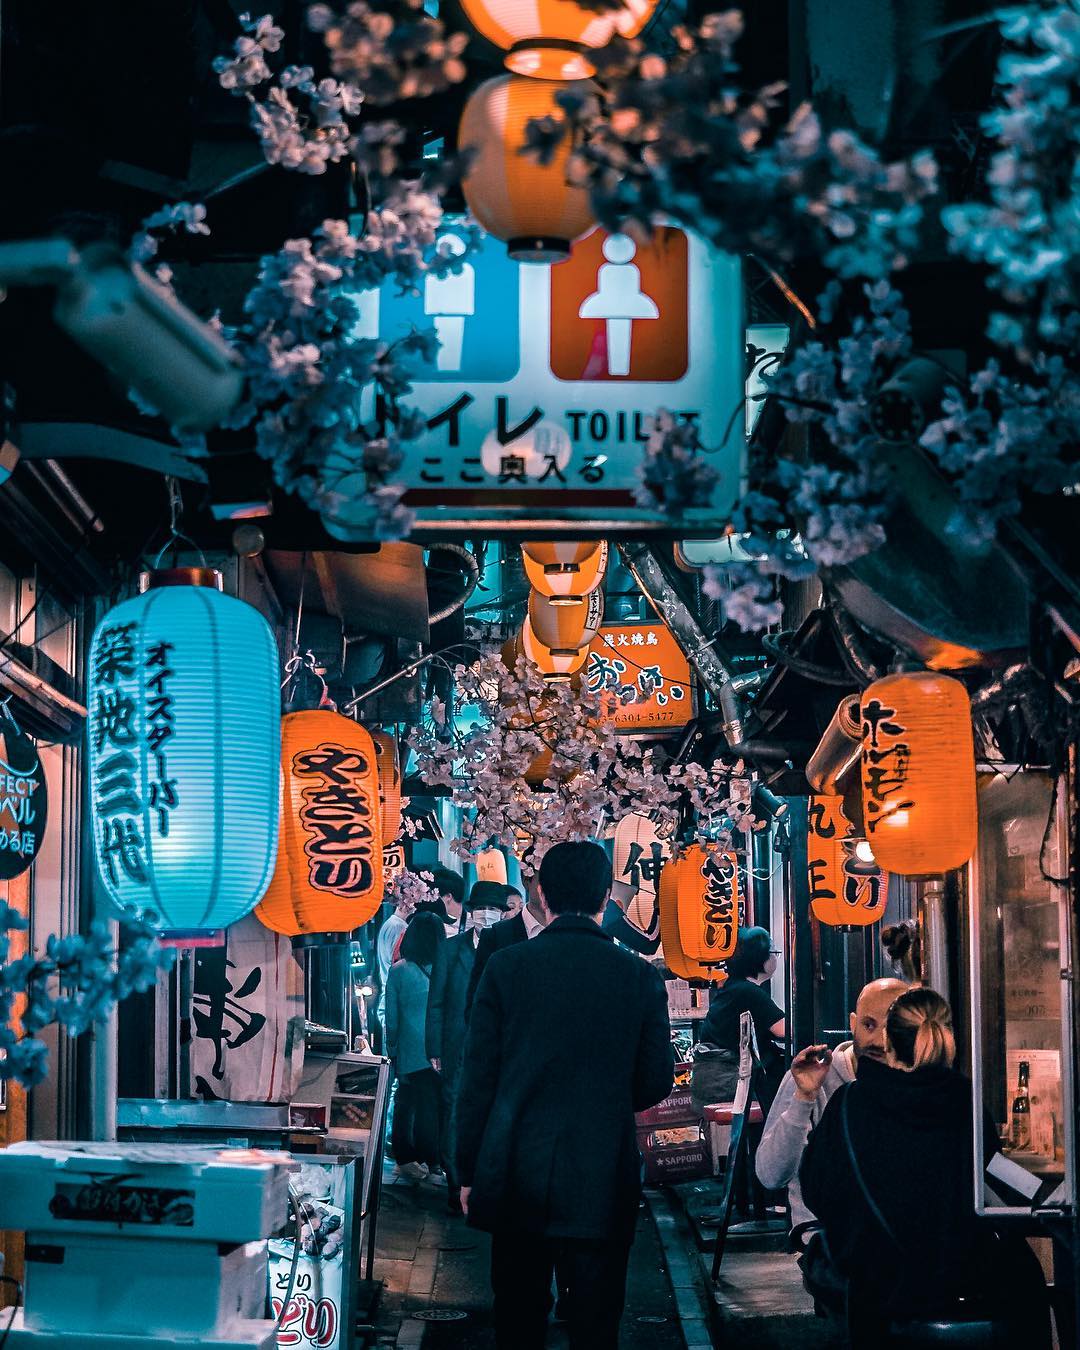 Tokyo Nightlife Photography by Hosokawa Ryohei